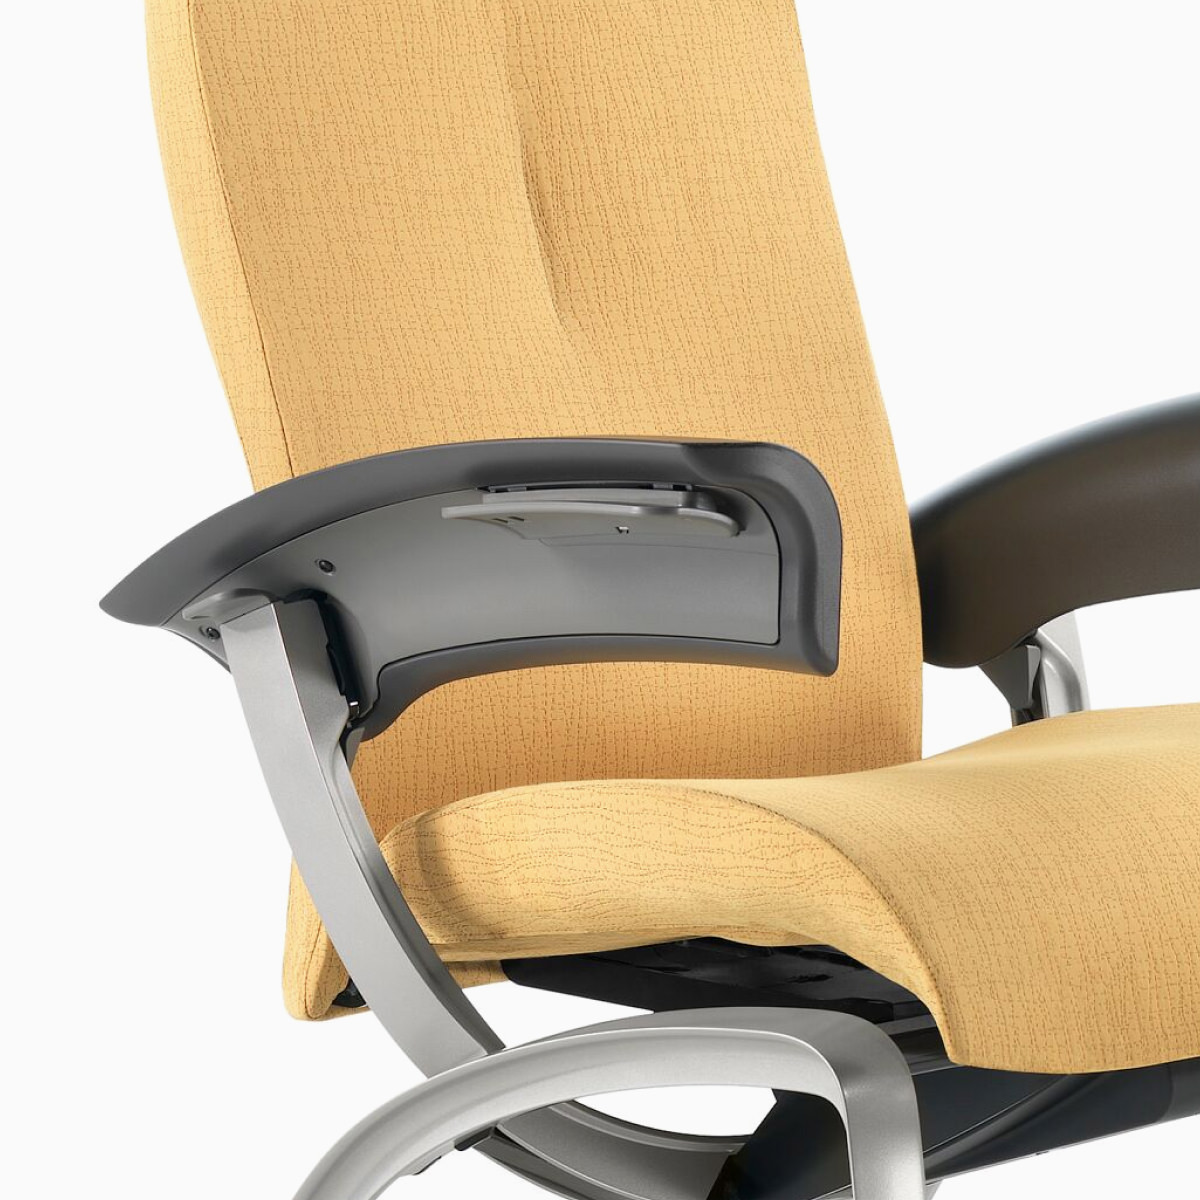 Detail of a Nemschoff Nala Patient Chair arm featuring the recline activation lever.